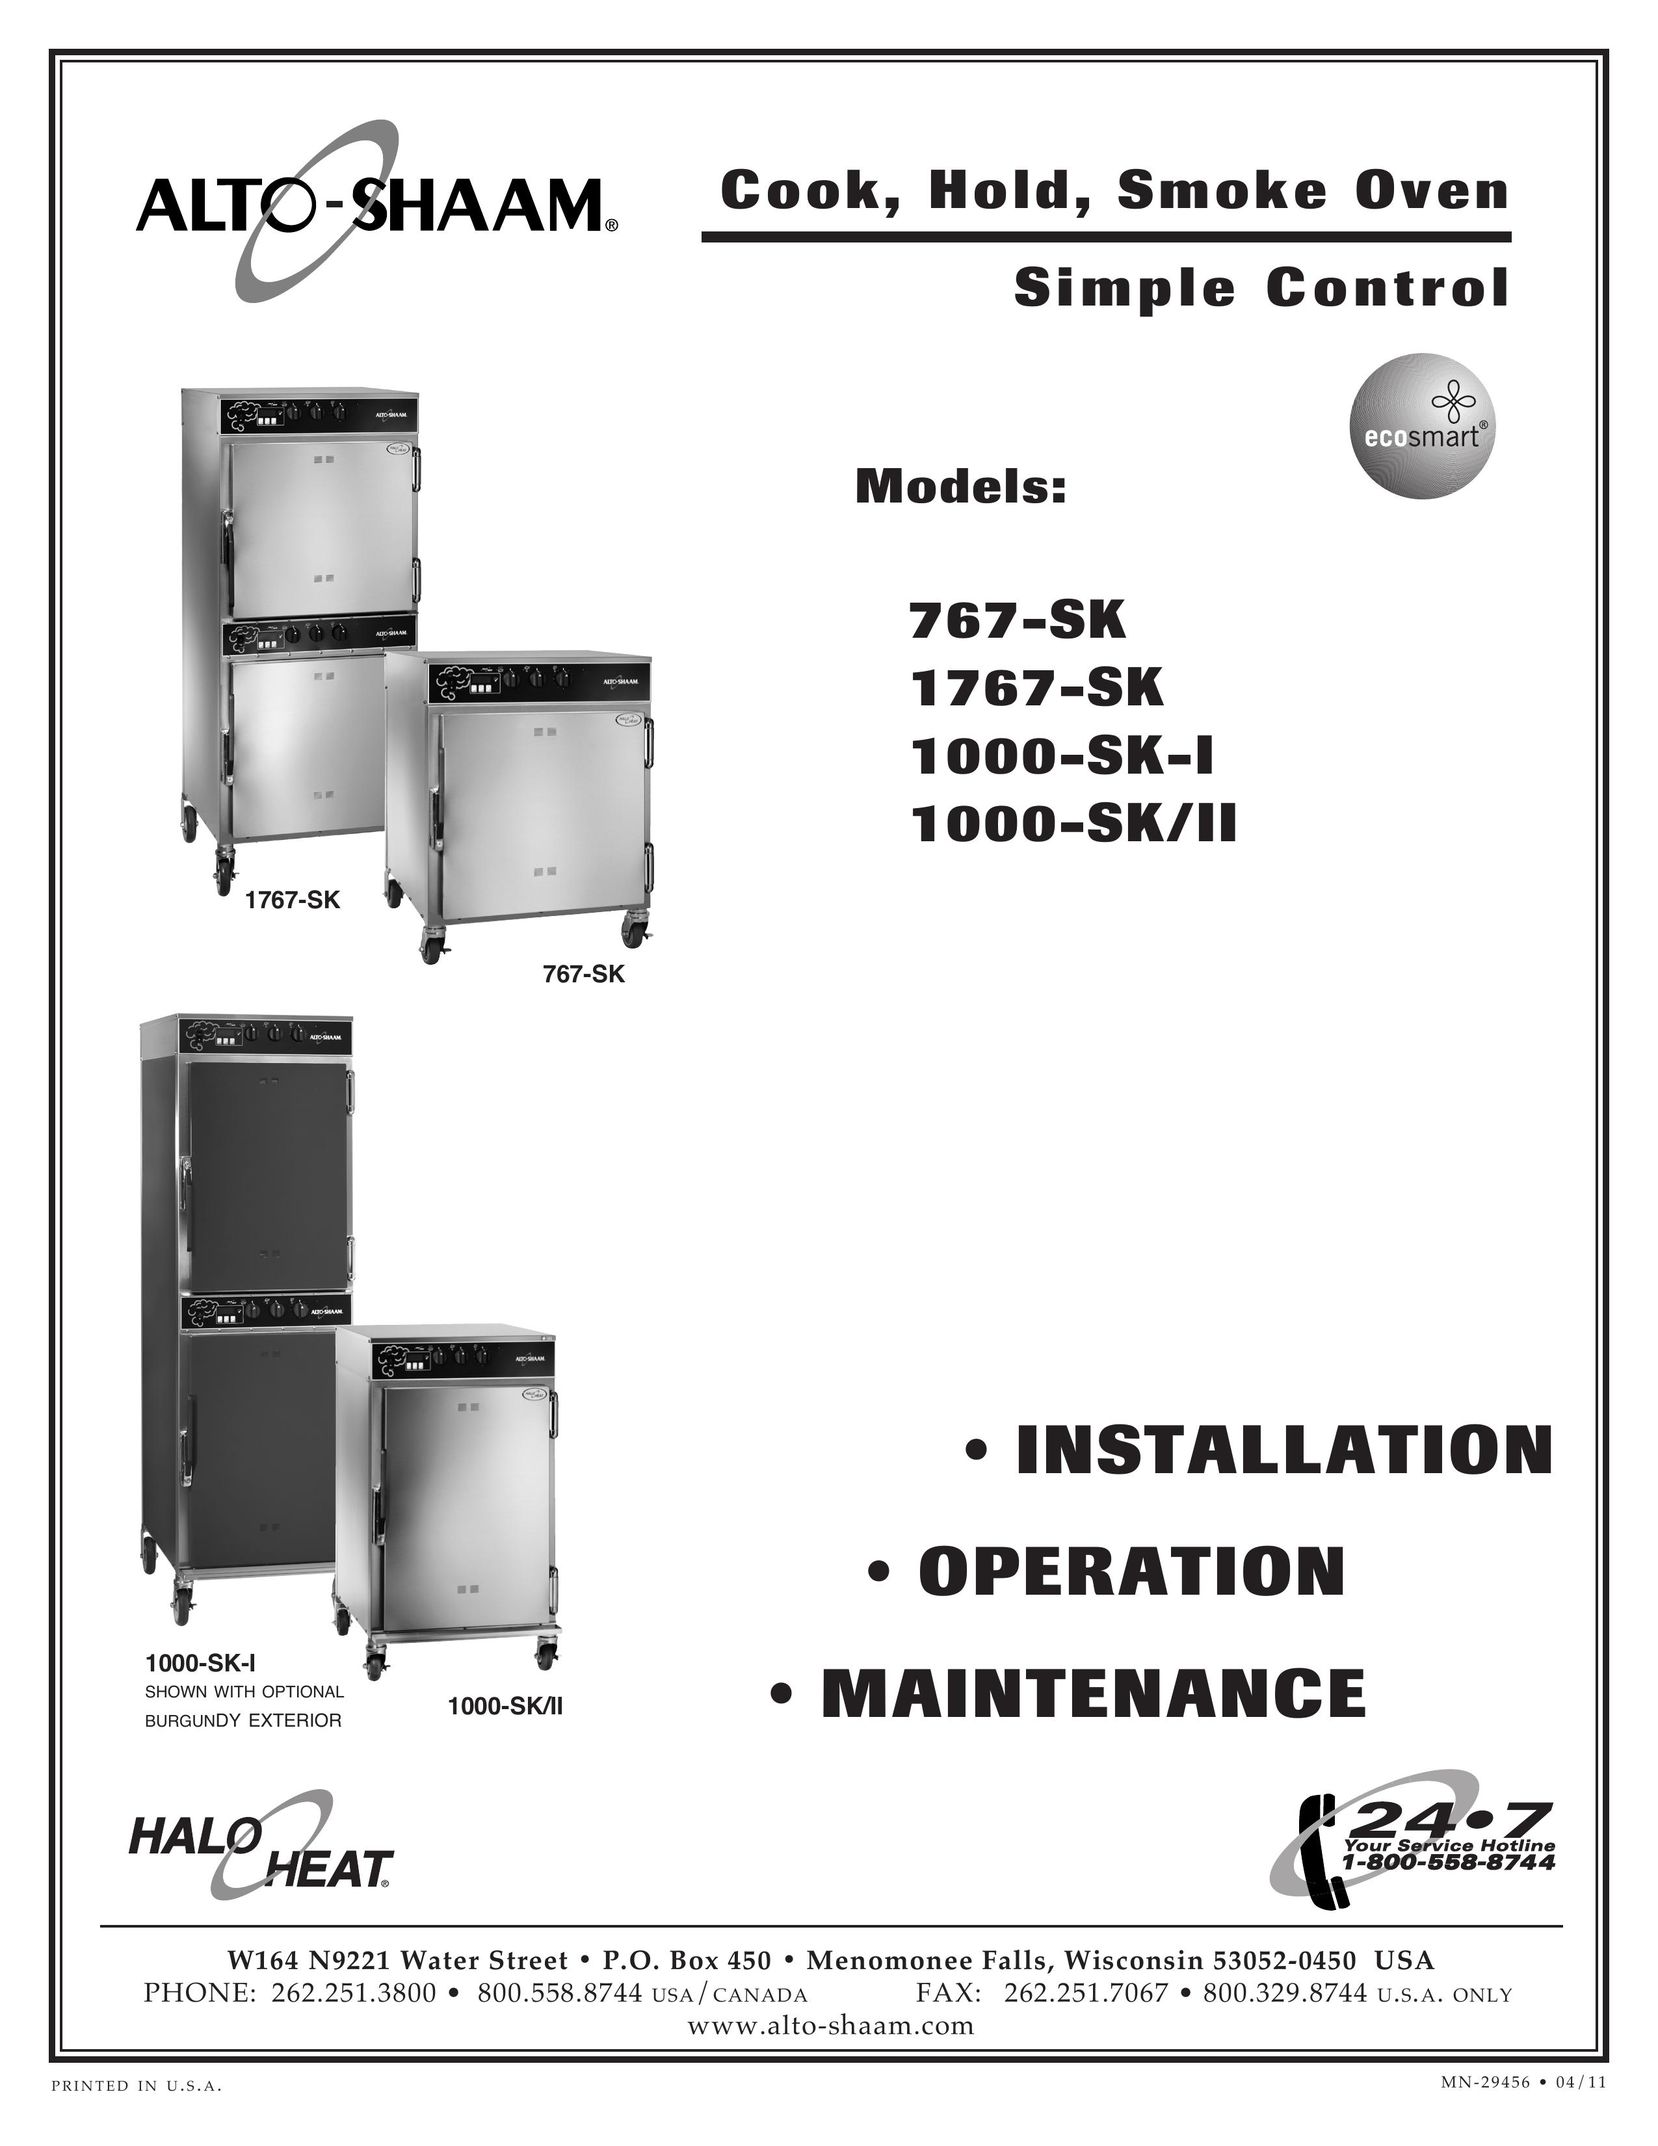 Alto-Shaam 1000-SK-I Double Oven User Manual